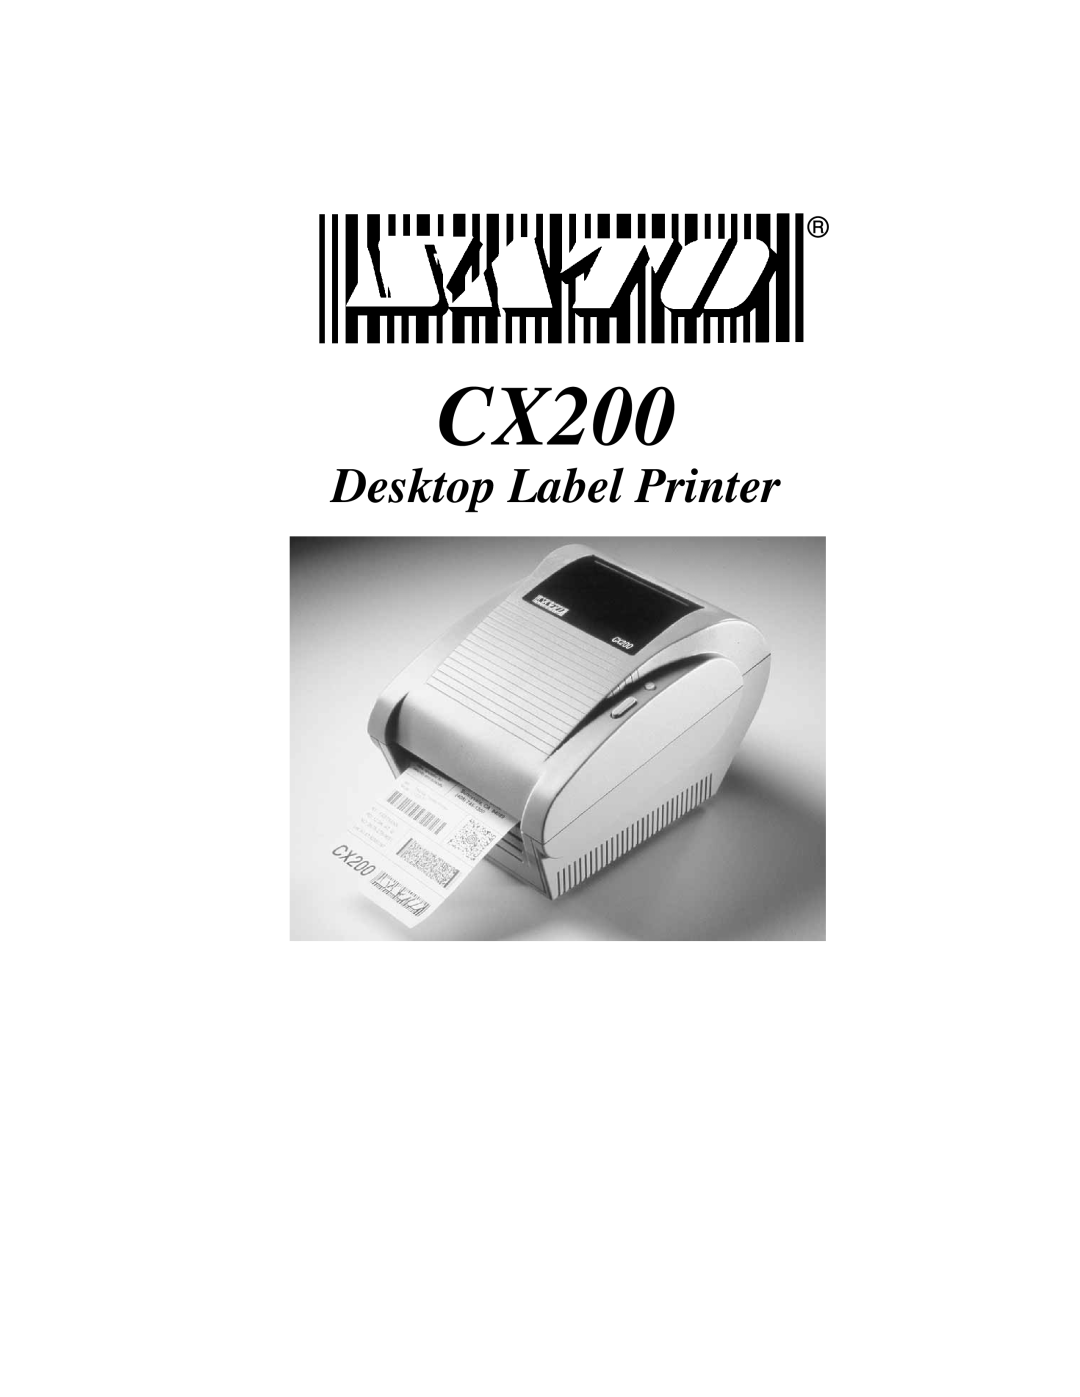 SATO CX200 manual User’S Guide, Desktop Label Printer 